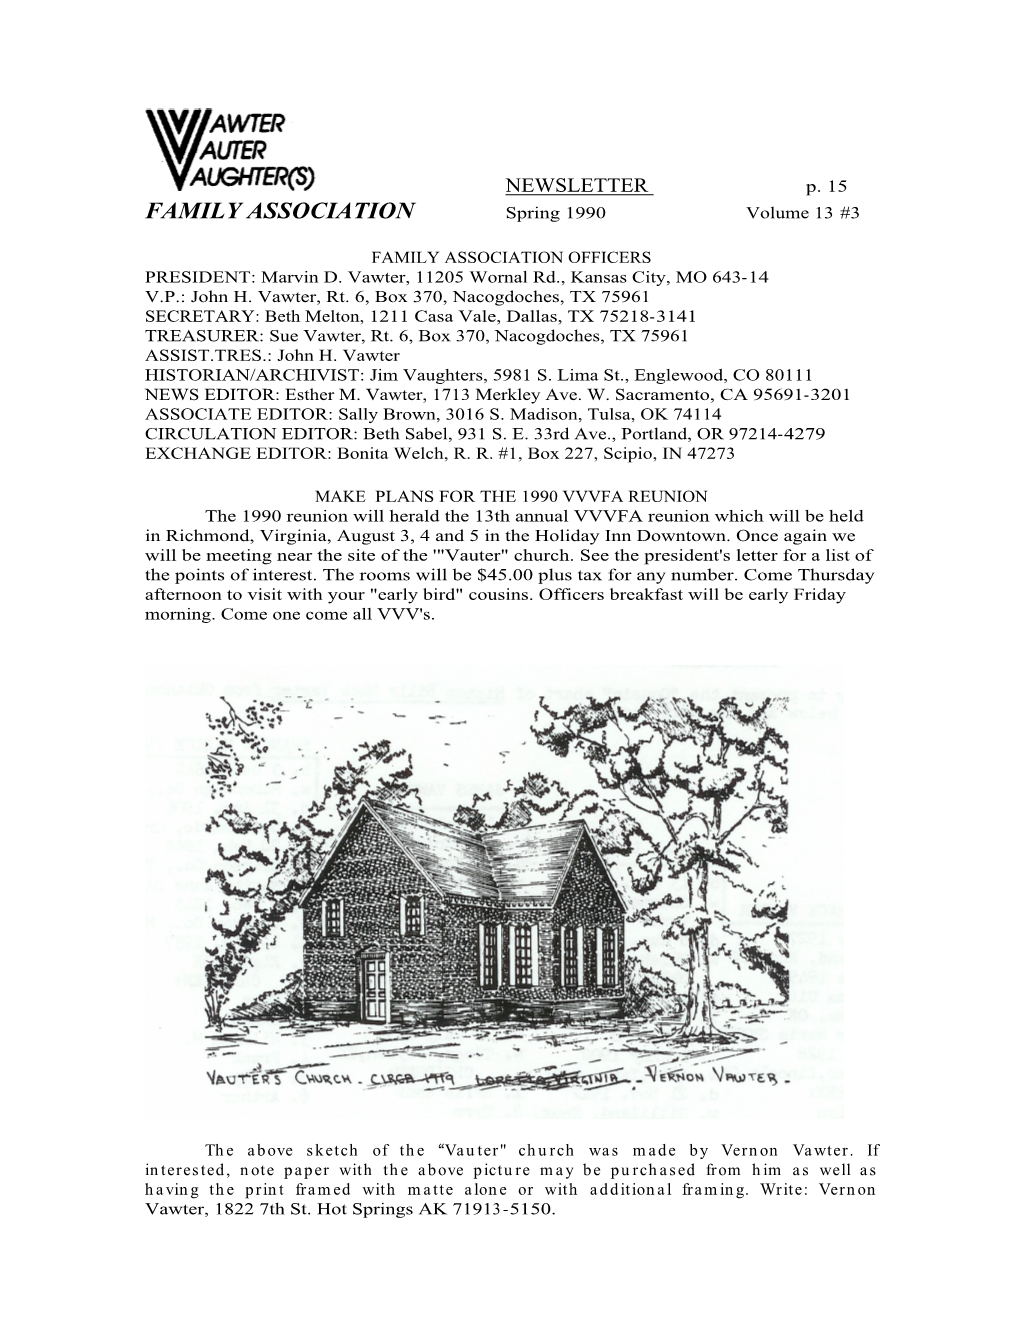 FAMILY ASSOCIATION Spring 1990 Volume 13 #3